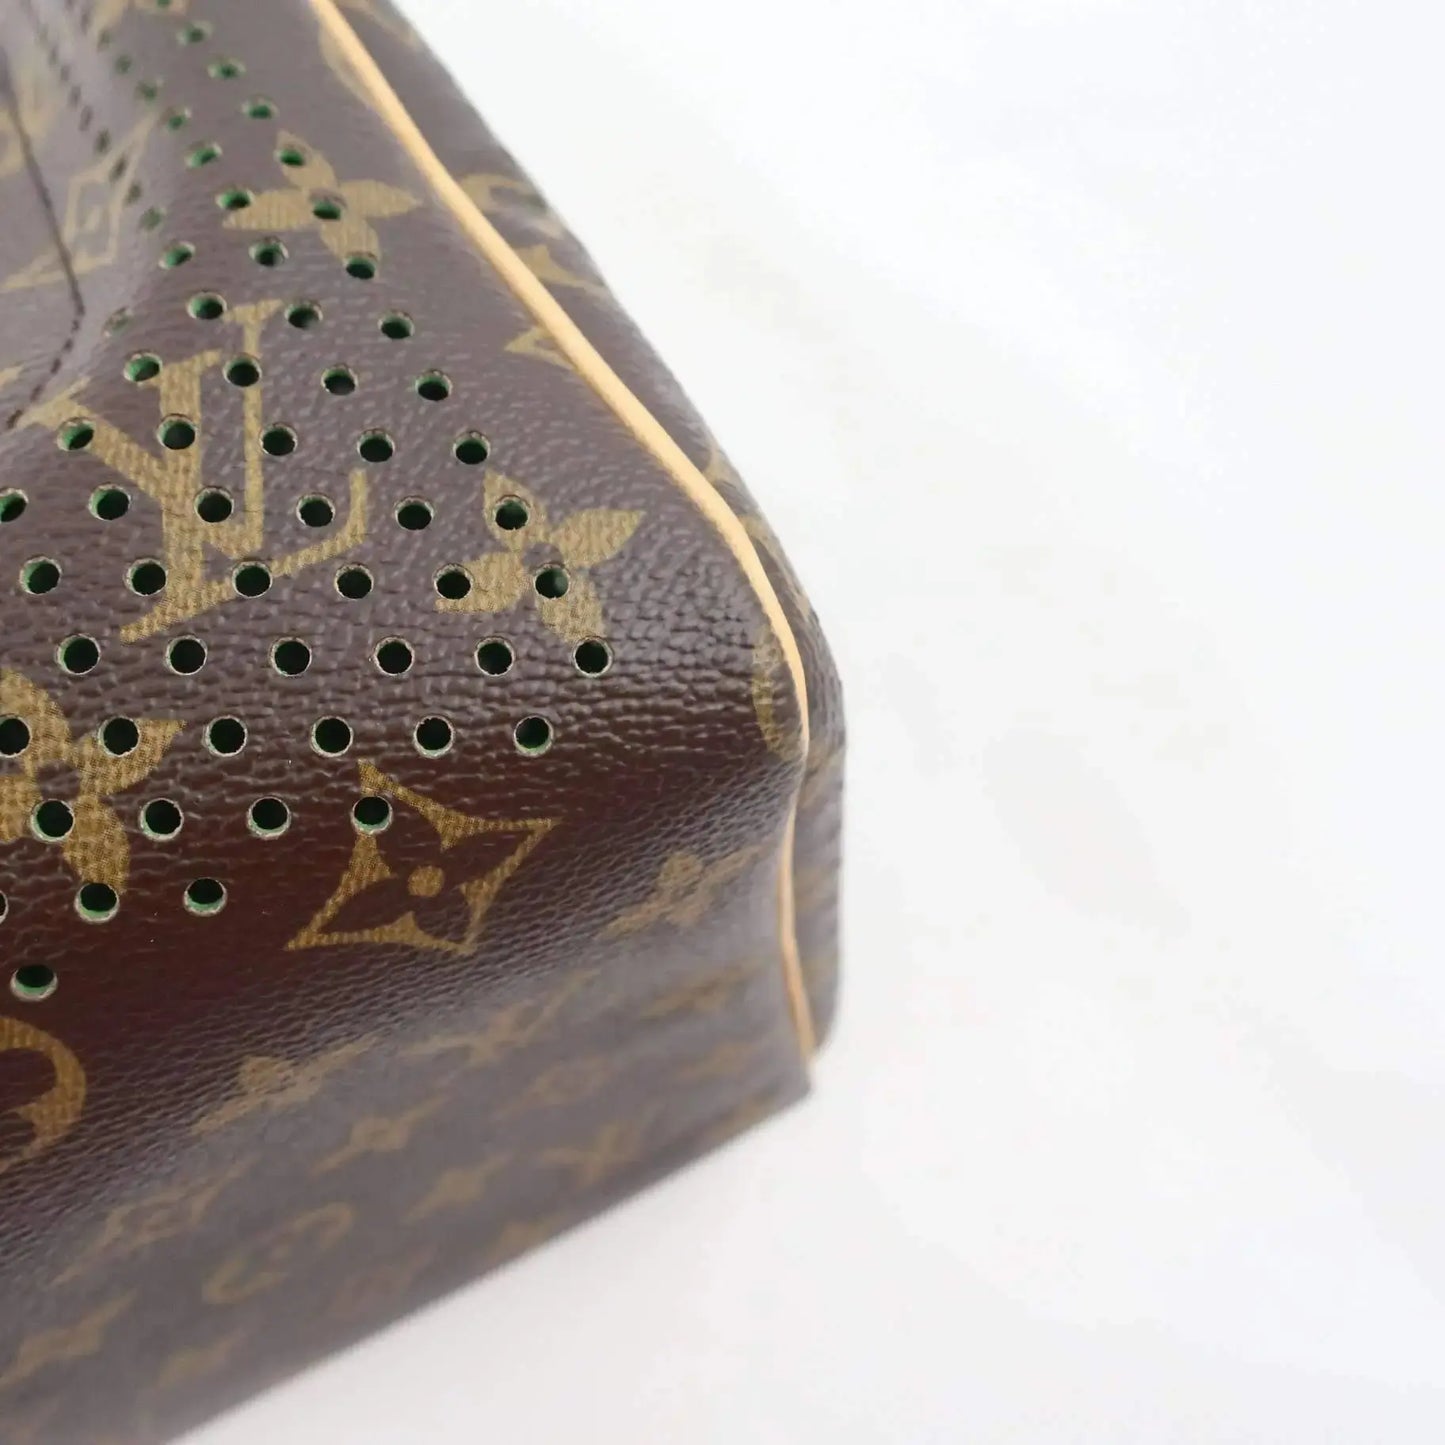 Louis Vuitton - Speedy 30 monogram limited edition: Perforated fuchsia